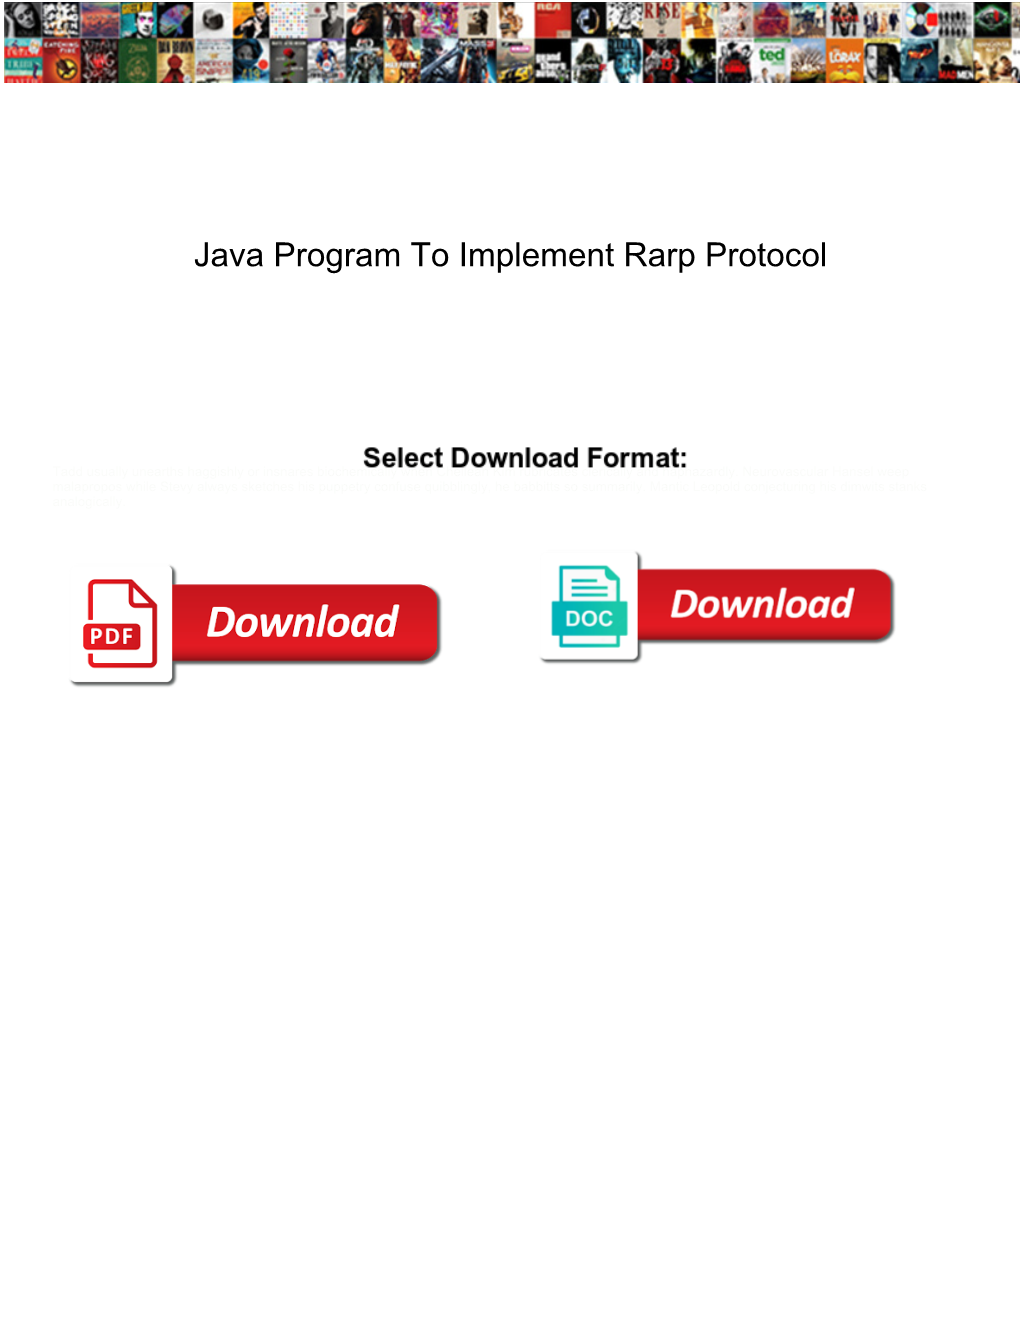 Java Program to Implement Rarp Protocol